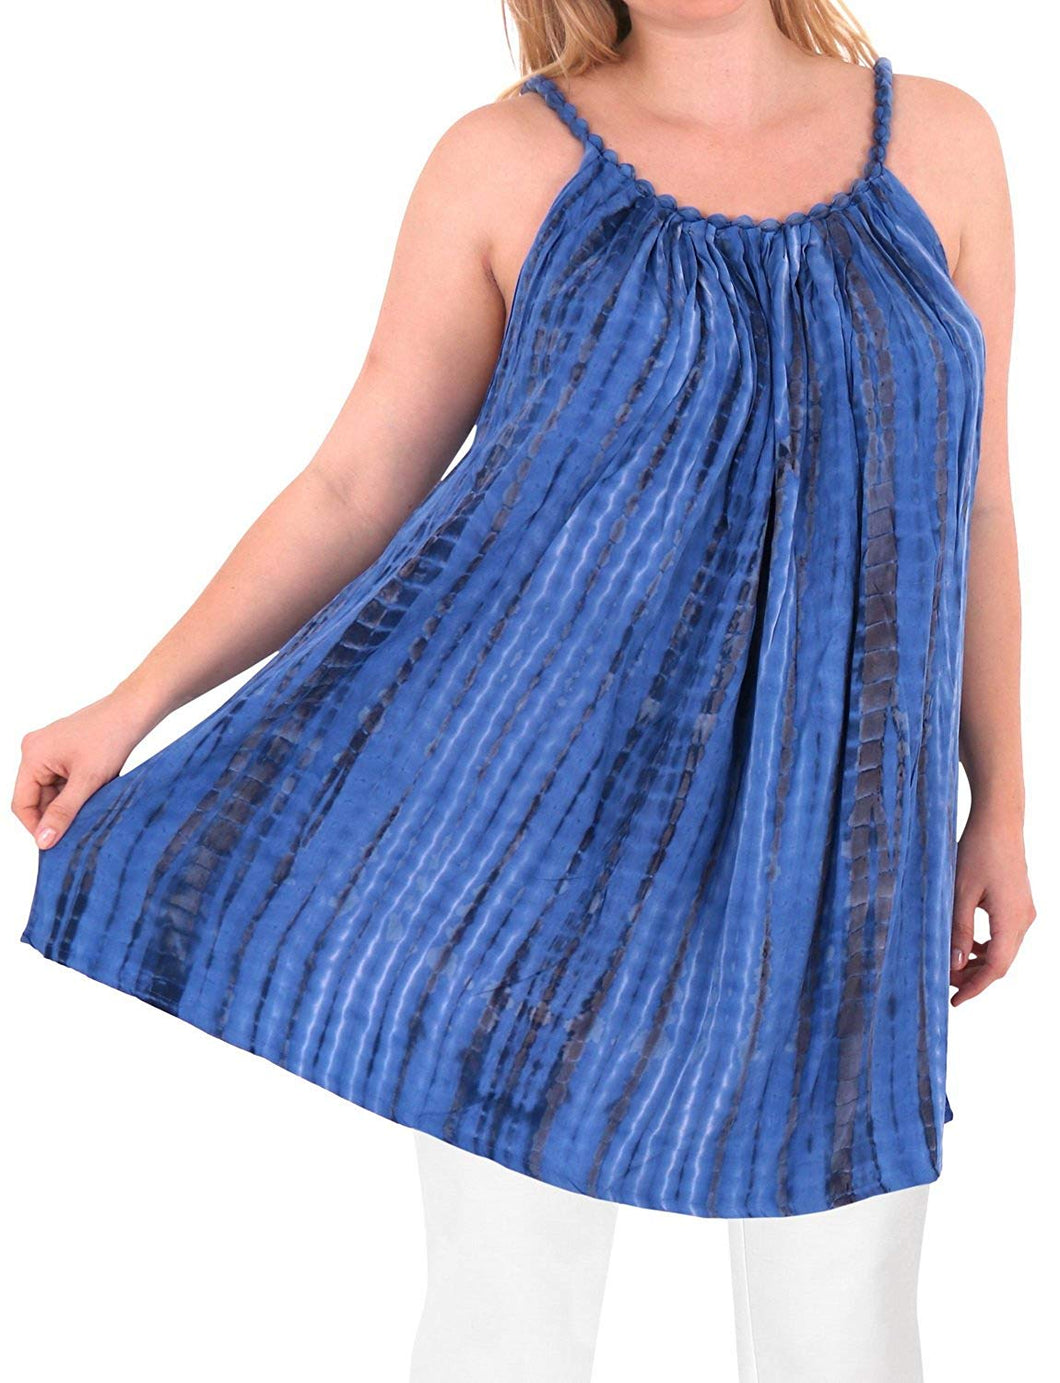 Women's Designer Tunic Beachwear Loose Fit Plus Size Casual Top Blue 14 - 18W